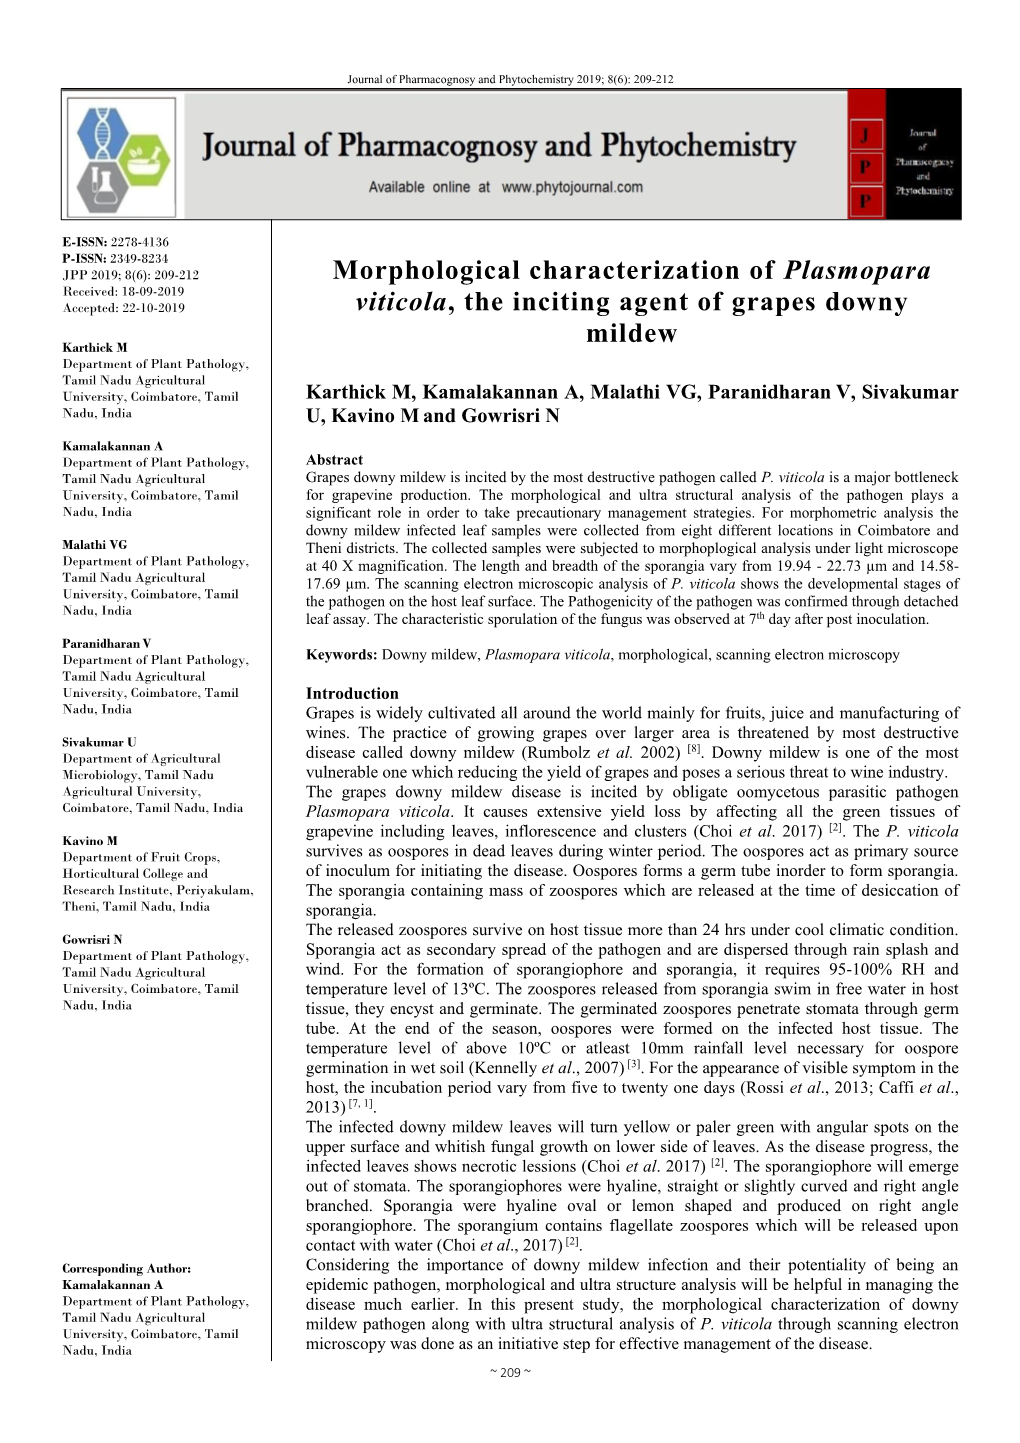 Morphological Characterization of Plasmopara Viticola, the Inciting